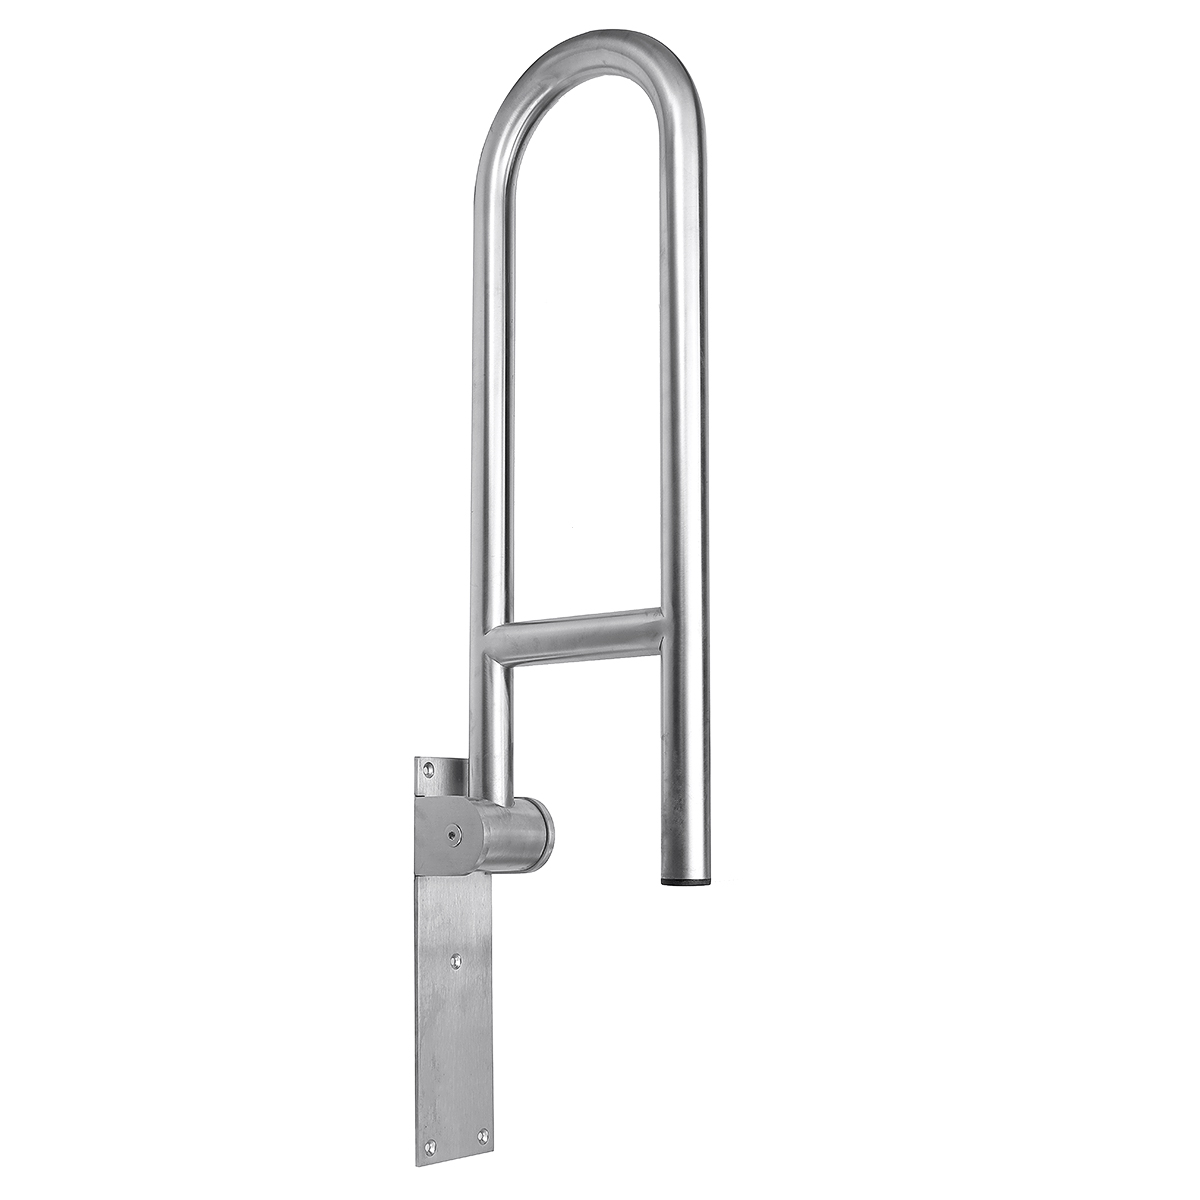 Stainless-Steel-Toilet-Safety-Frame-Rail-Grab-Bar-Handicap-Bathroom-Hand-Grips-1650108-5